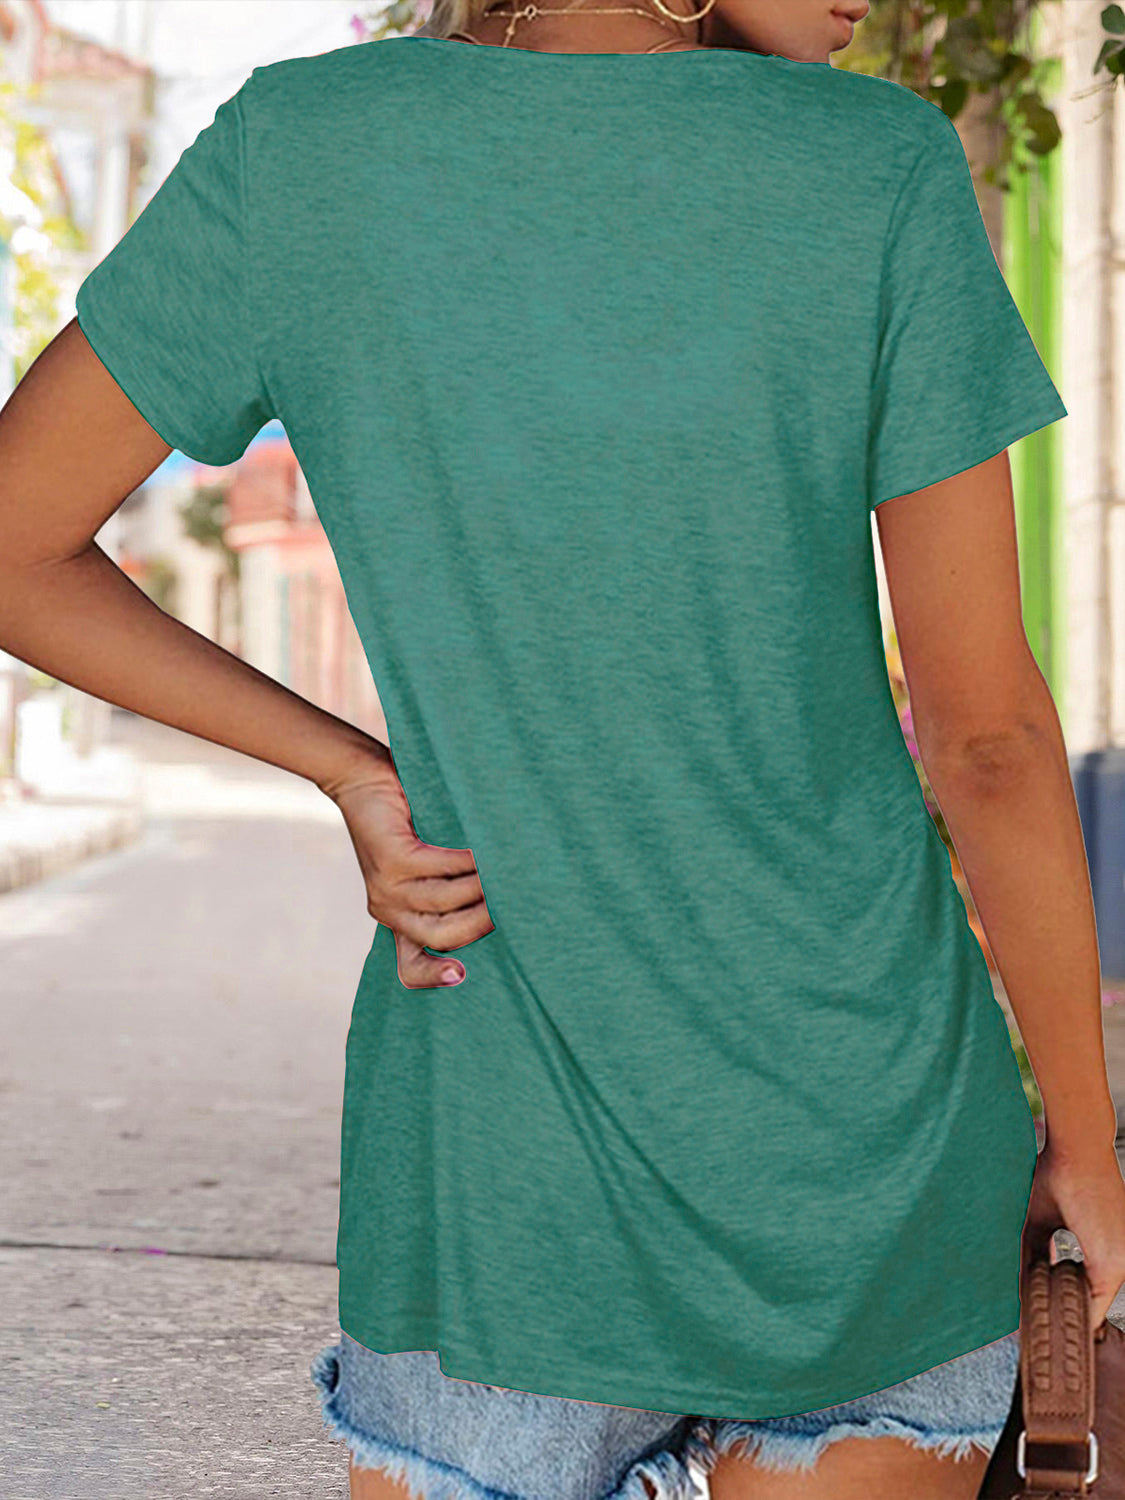 Jack-O’-Lantern Graphic T-Shirt - T-Shirts - Shirts & Tops - 14 - 2024